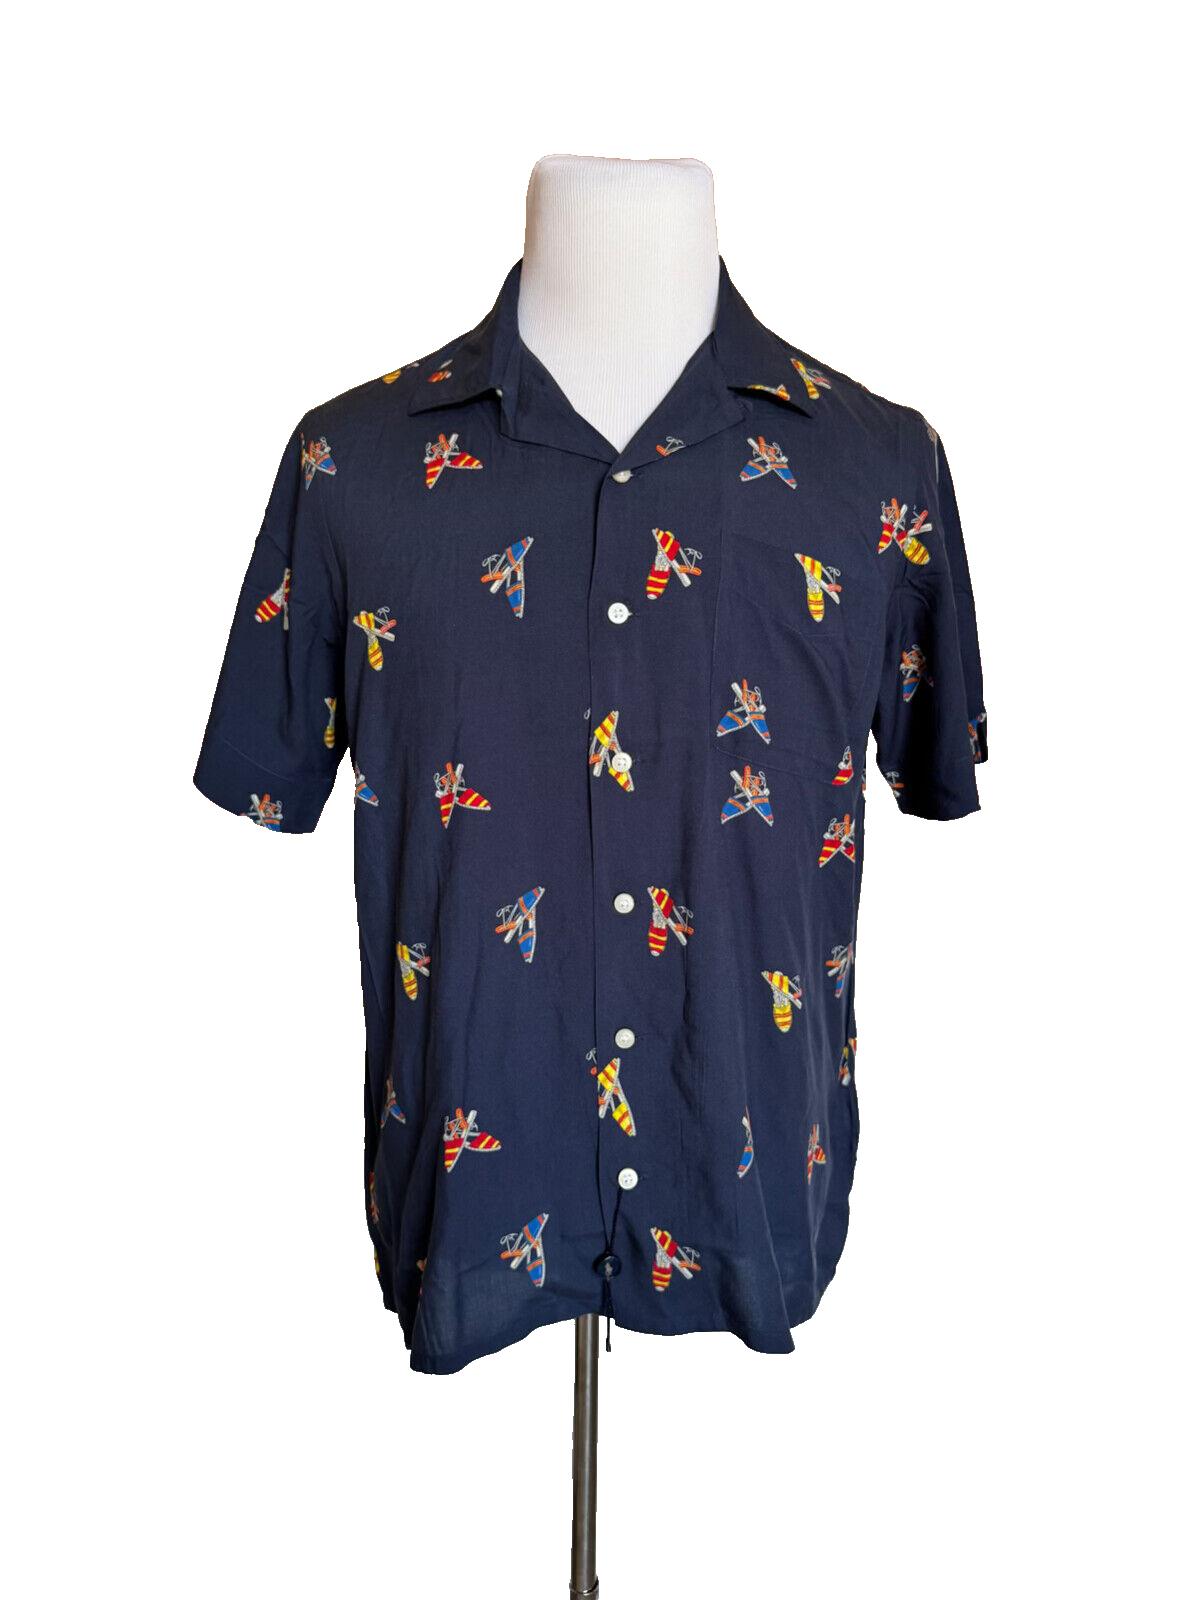 NWT $228 Polo Ralph Lauren Short Sleeve Sandals Printed Button Shirt Blue Medium